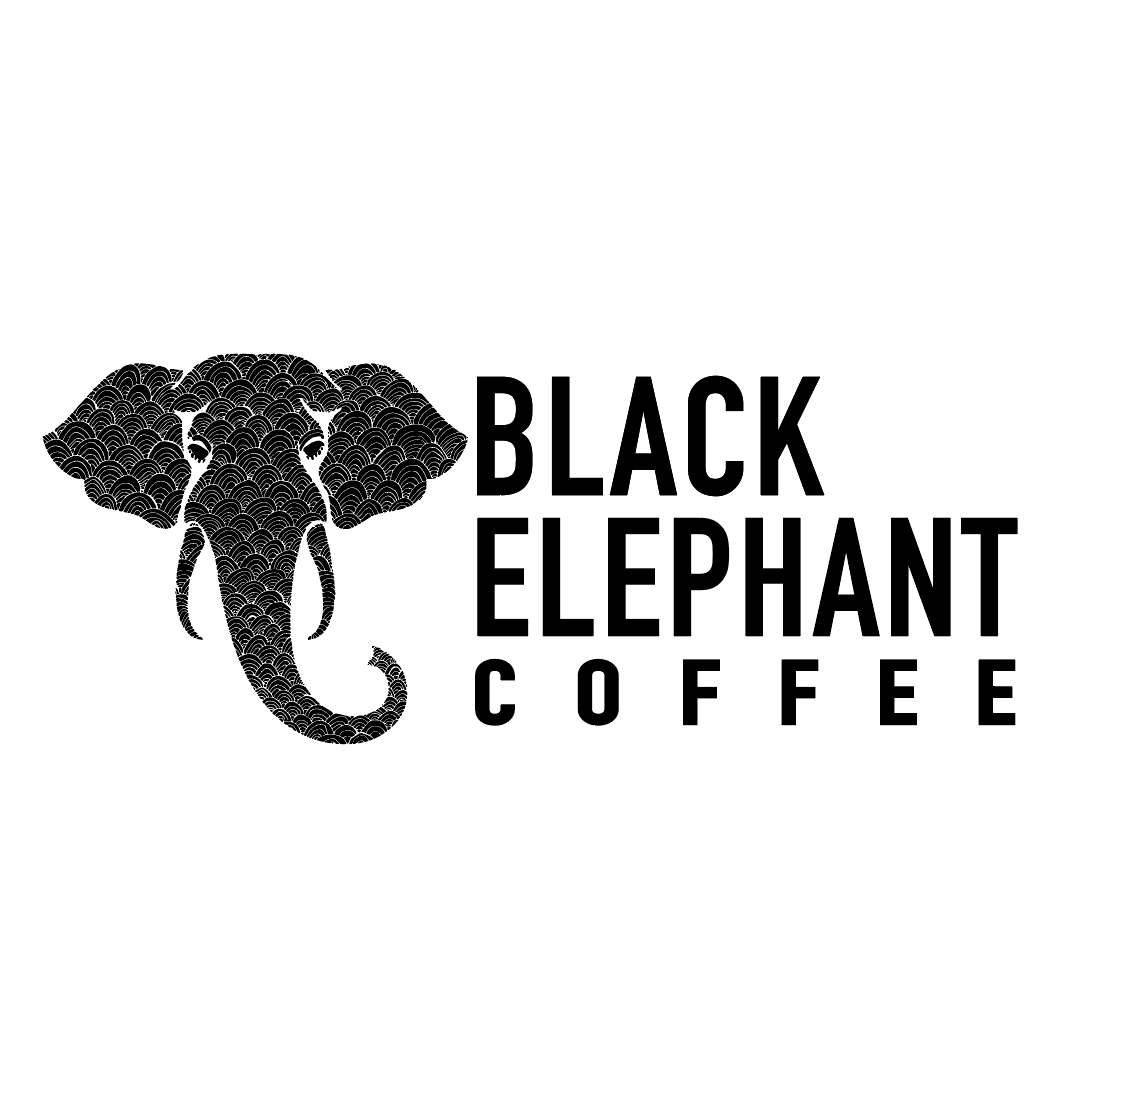 Black Elephant Coffee